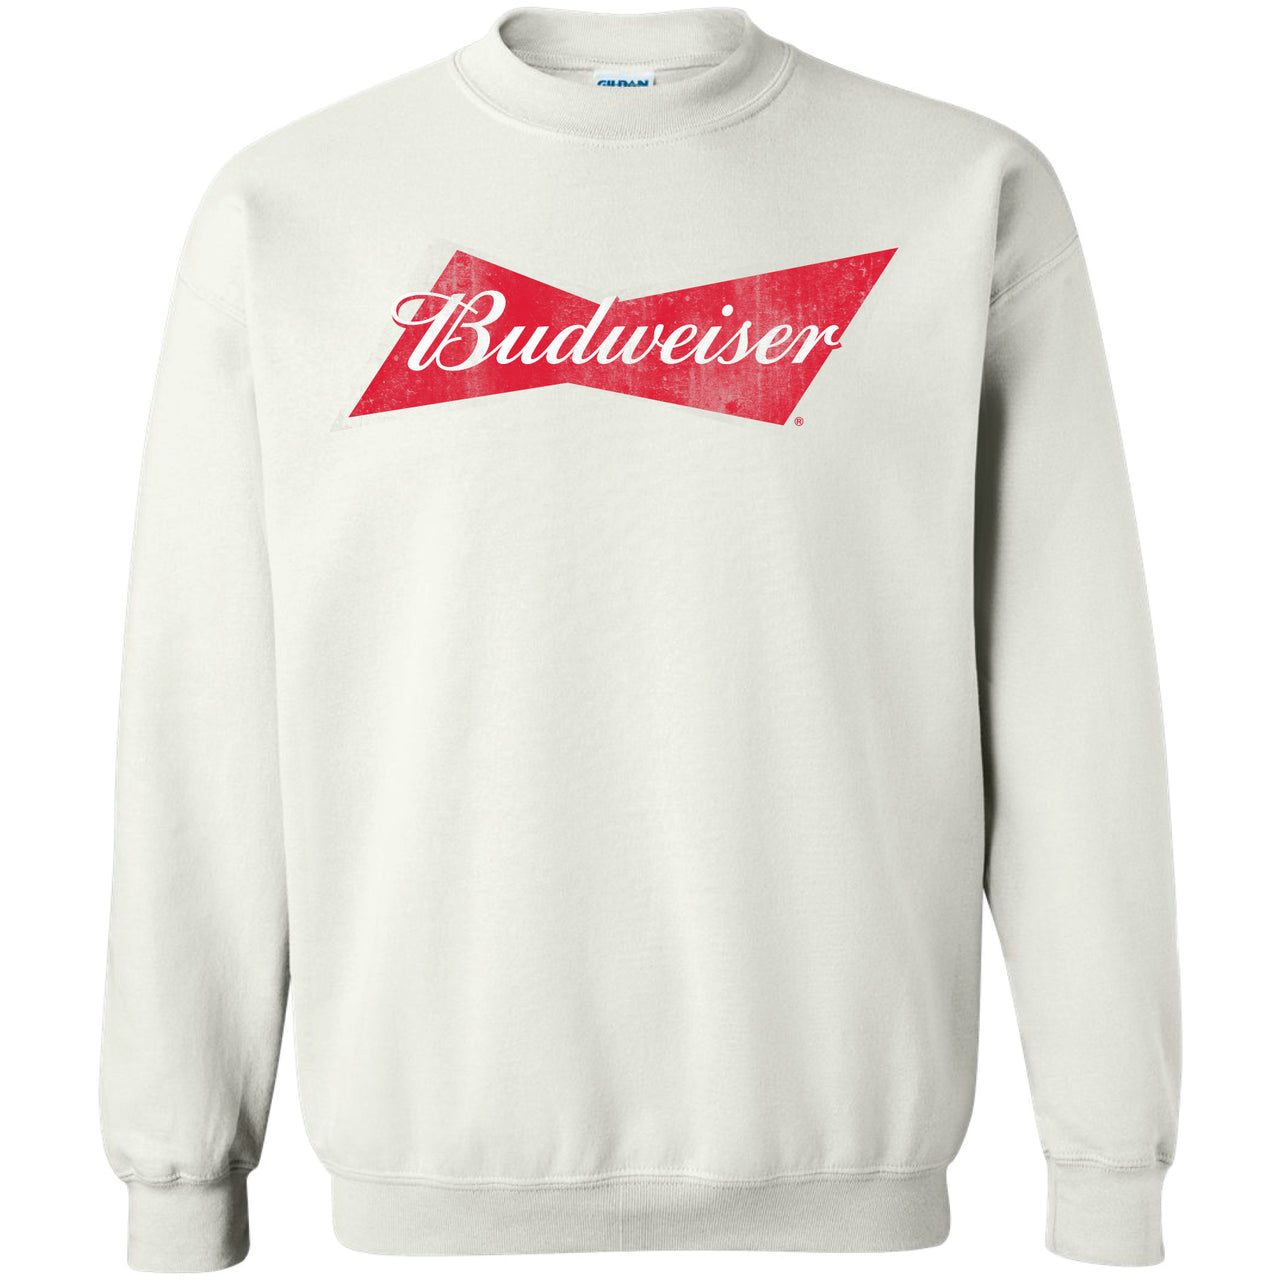 Budweiser - Bow Tie Logo Crew Sweatshirt